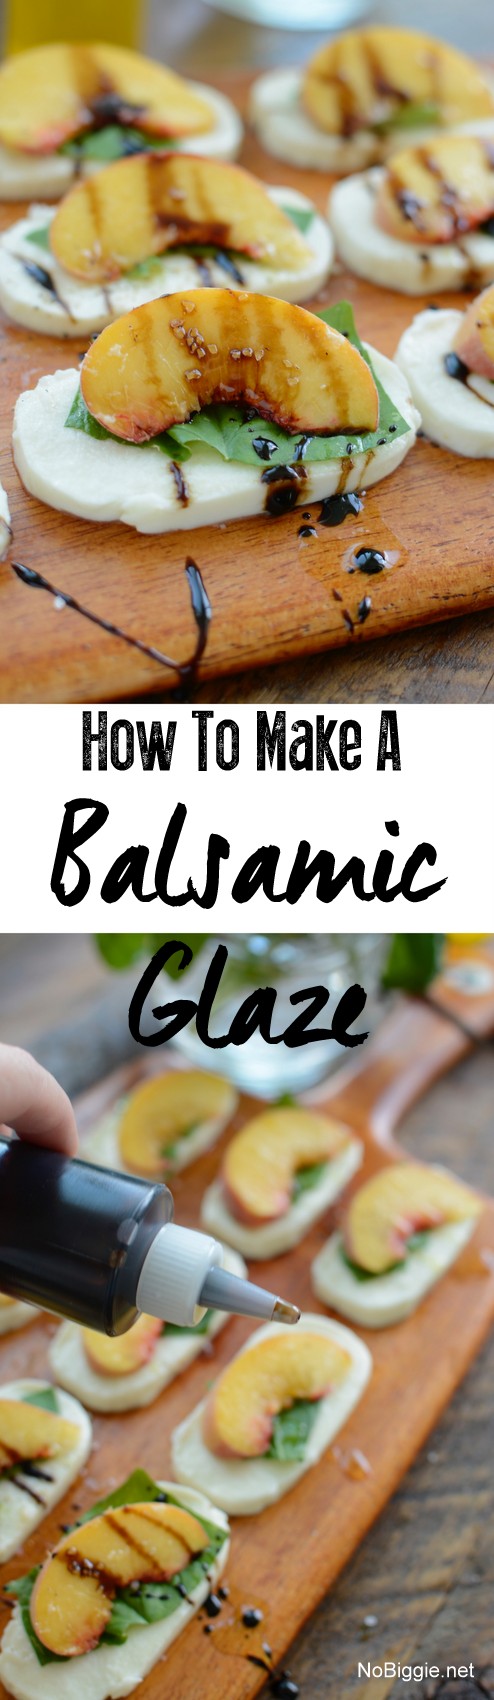 http://www.nobiggie.net/wp-content/uploads/2016/09/How-to-make-a-balsamic-glaze.jpg